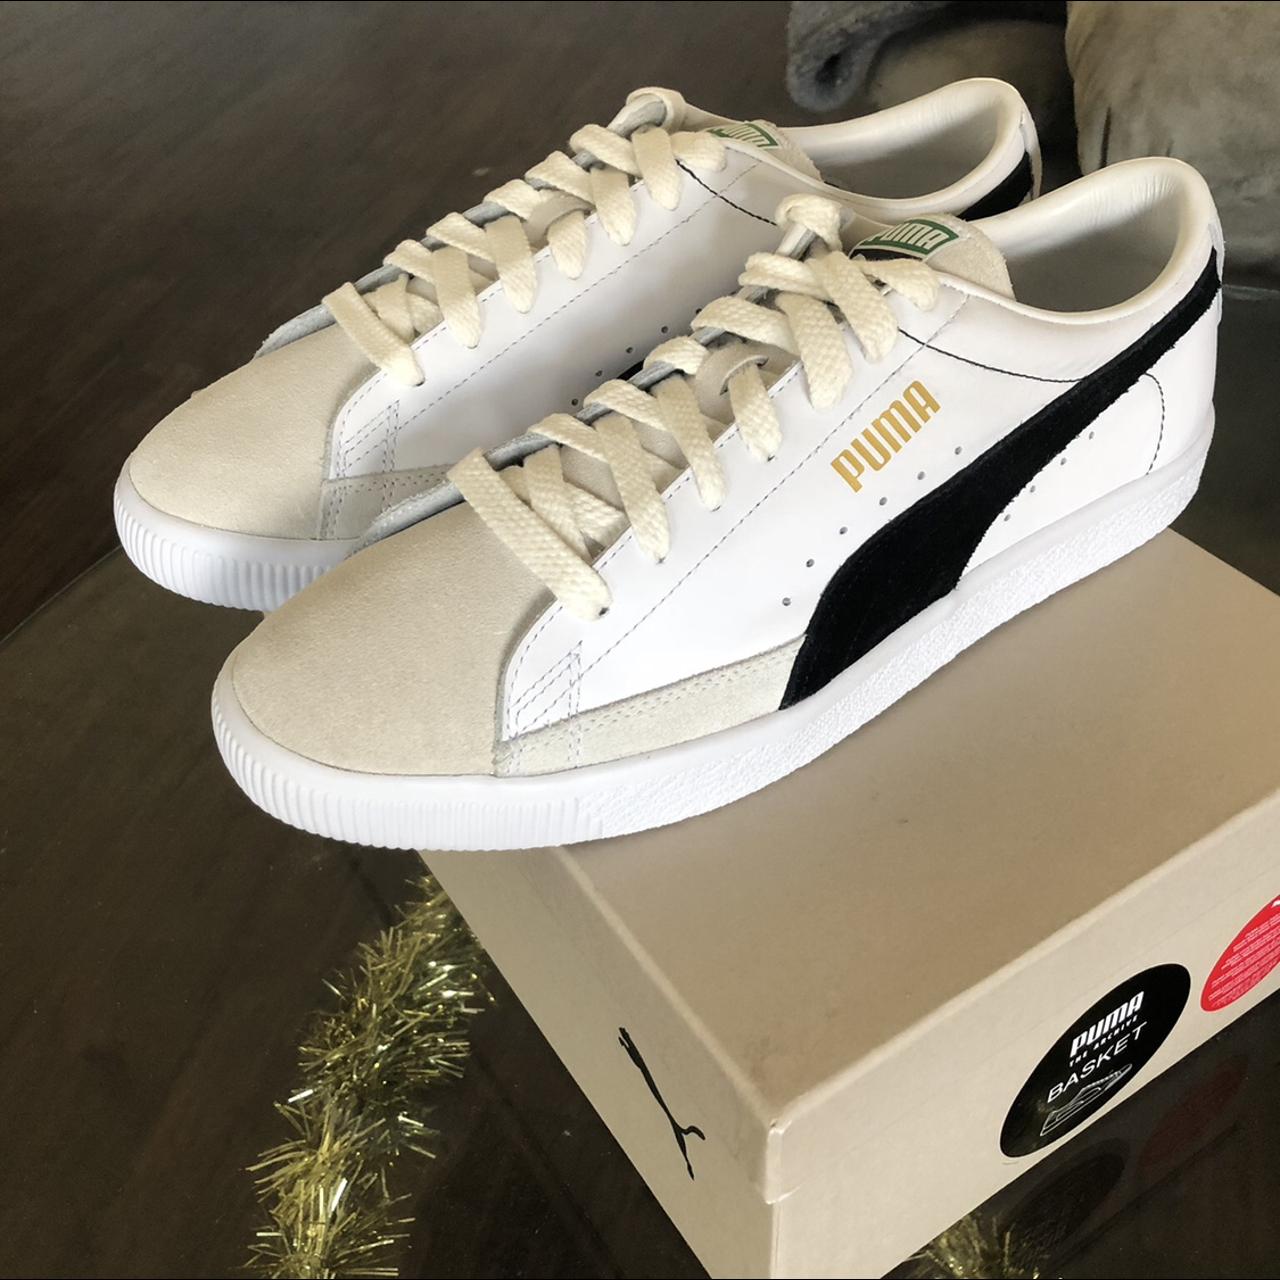 Jay-Z's summer flex? Budget-friendly Puma sneakers